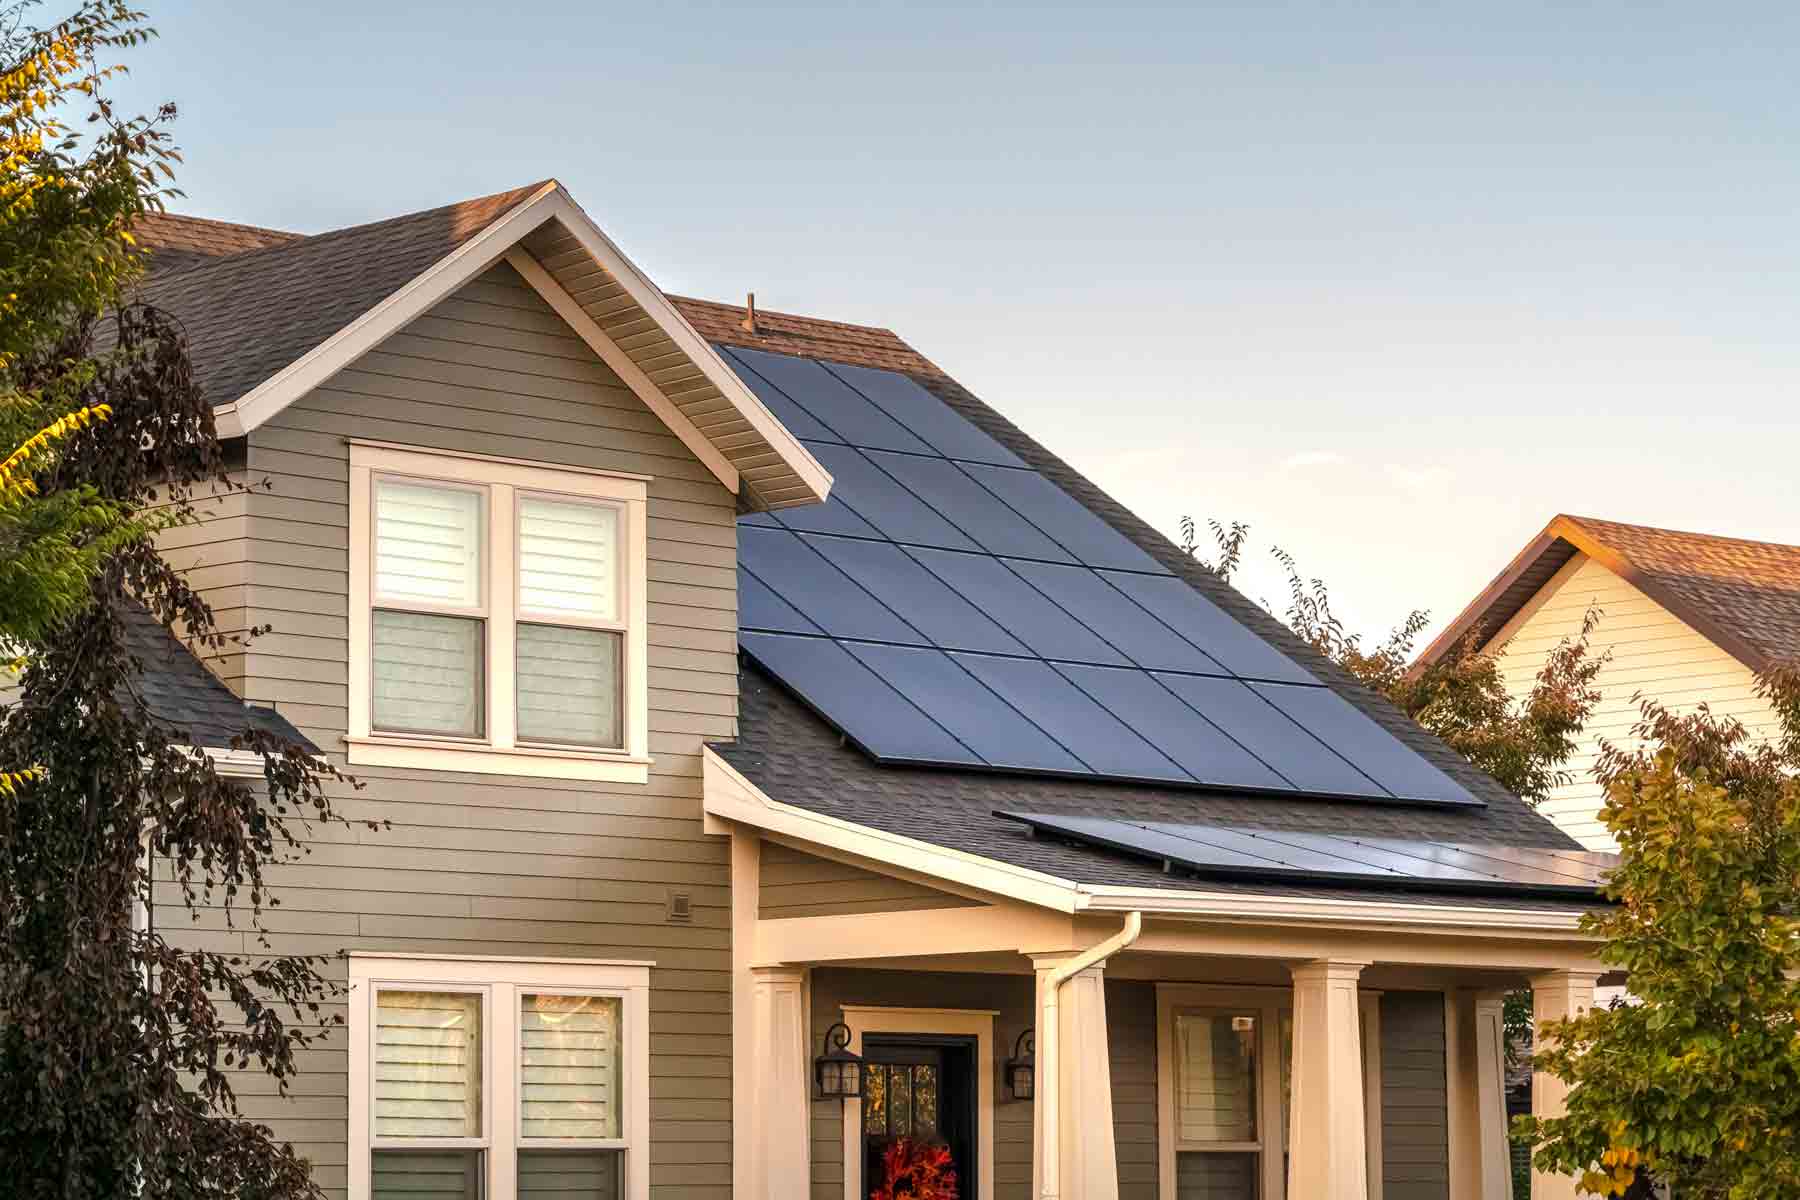 Find a solar panel installer near you